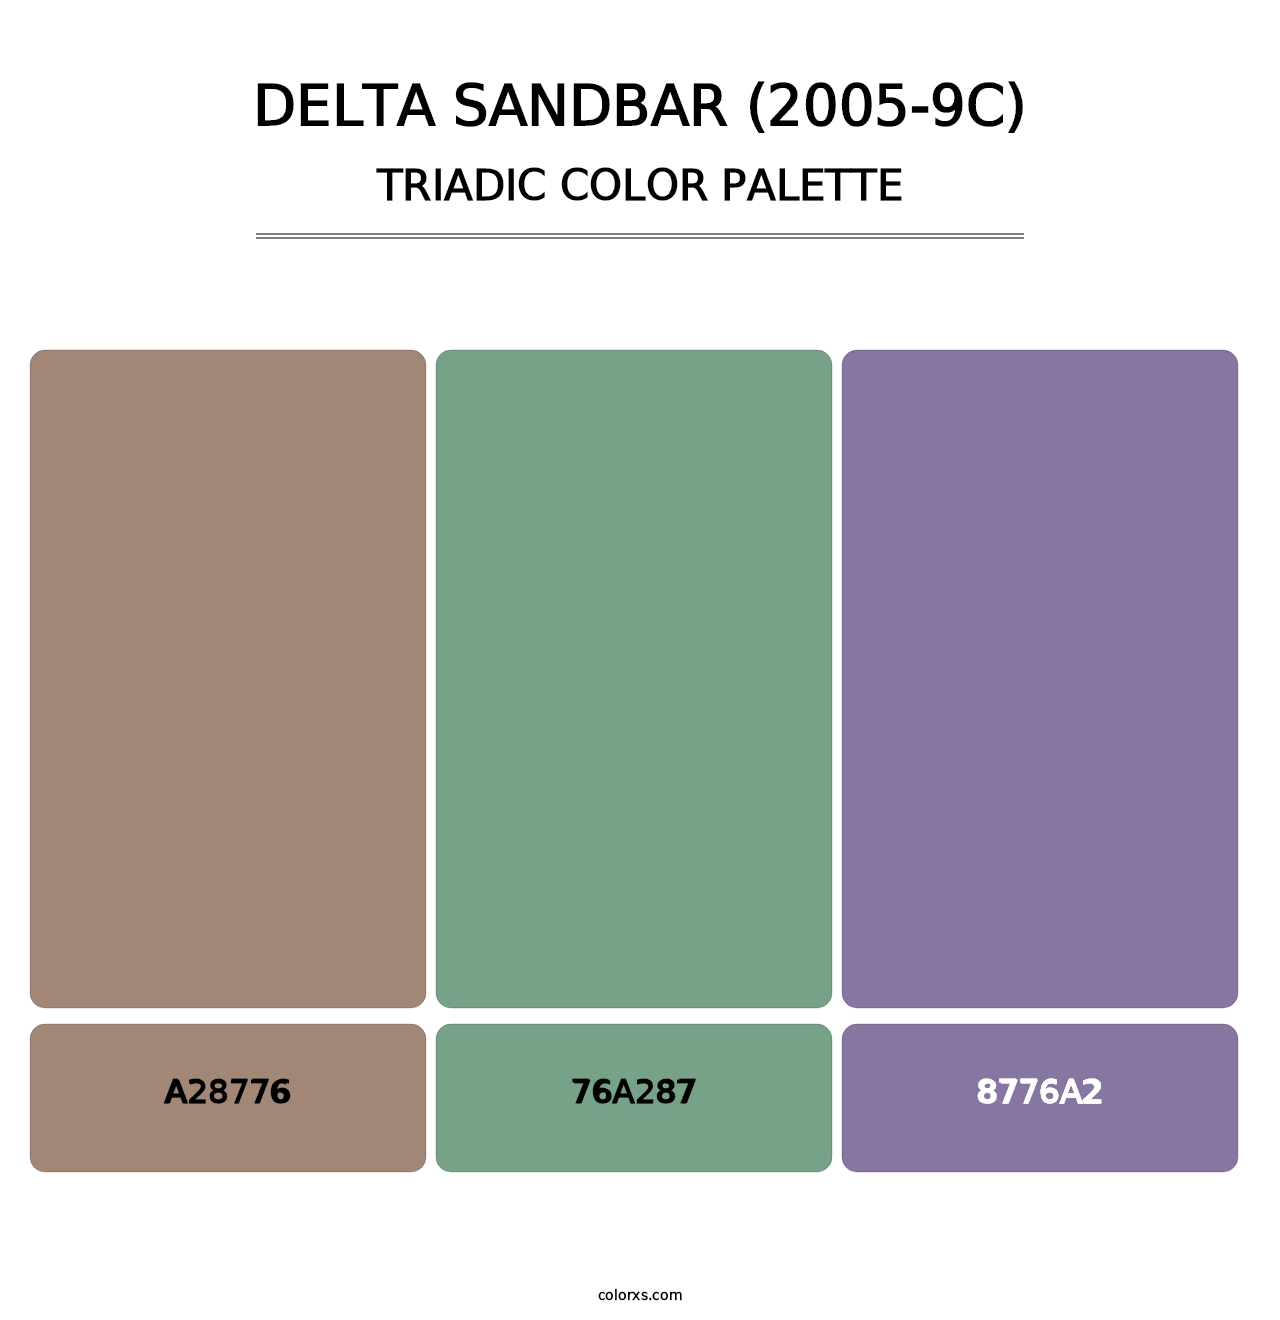 Delta Sandbar (2005-9C) - Triadic Color Palette